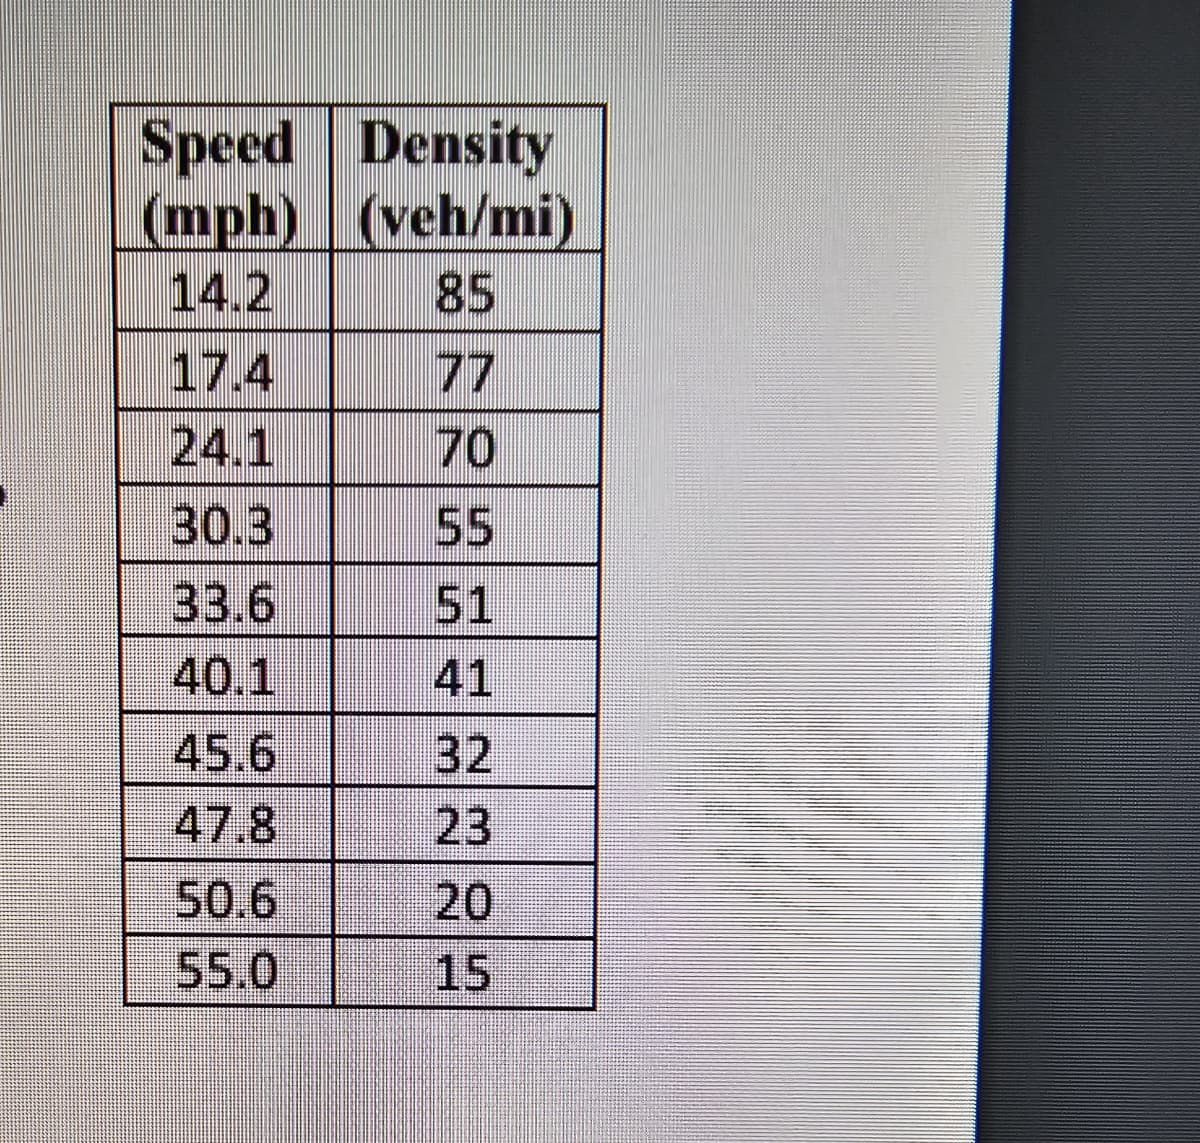 Speed Density
(mph) (veh/mi)
24.1
30.3
33.6
40.1
45.6
47.8
50.6
55.0
70
55
23
20